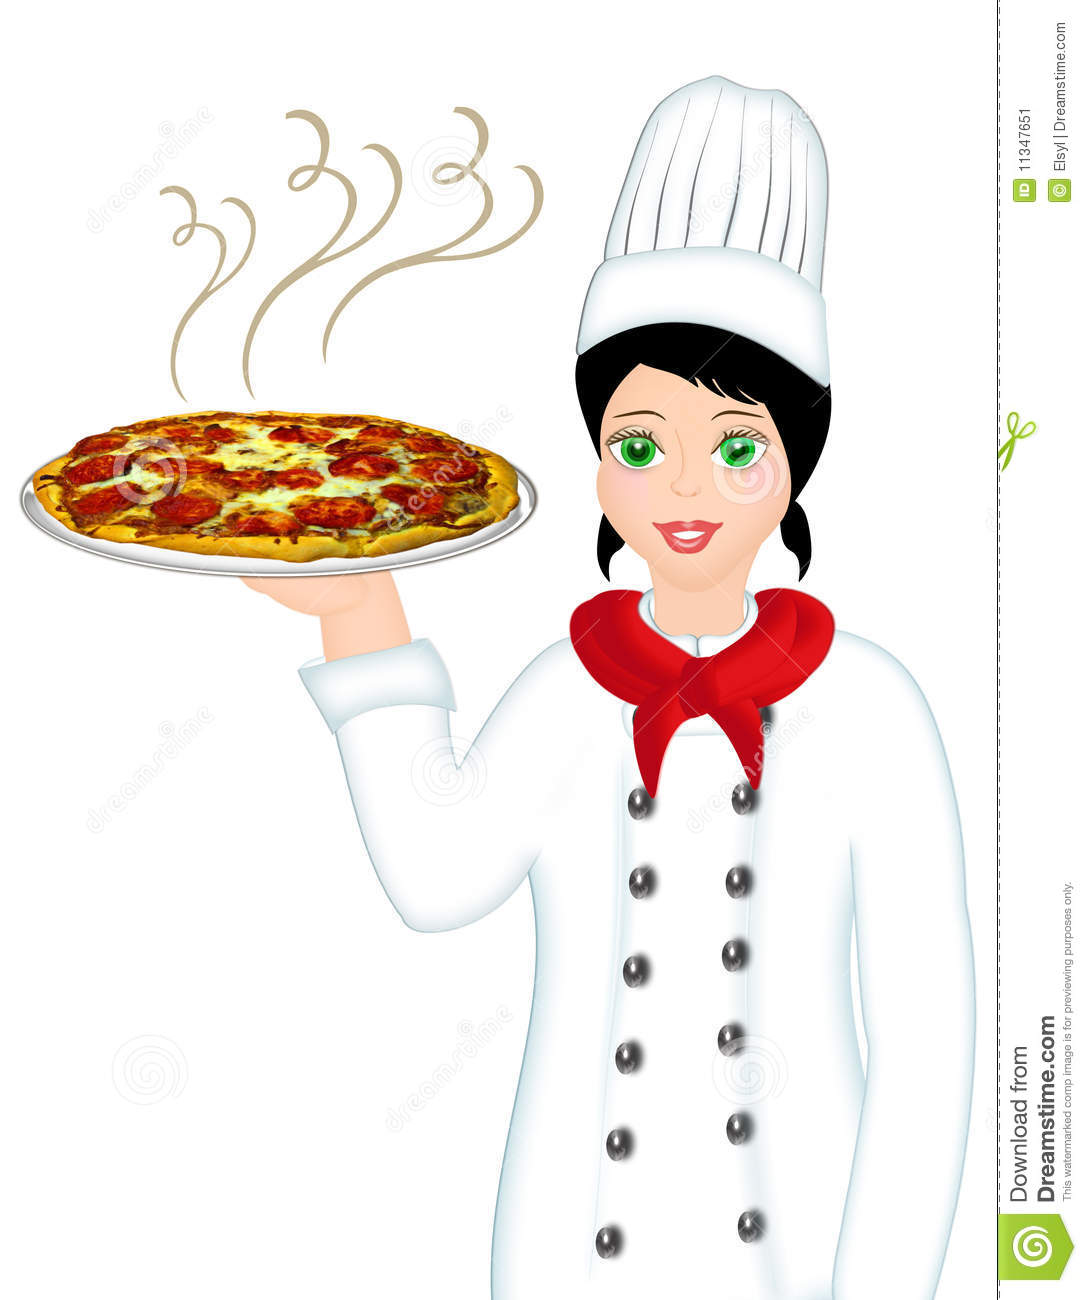 Pizza Chef Stock Image   Image  11347651